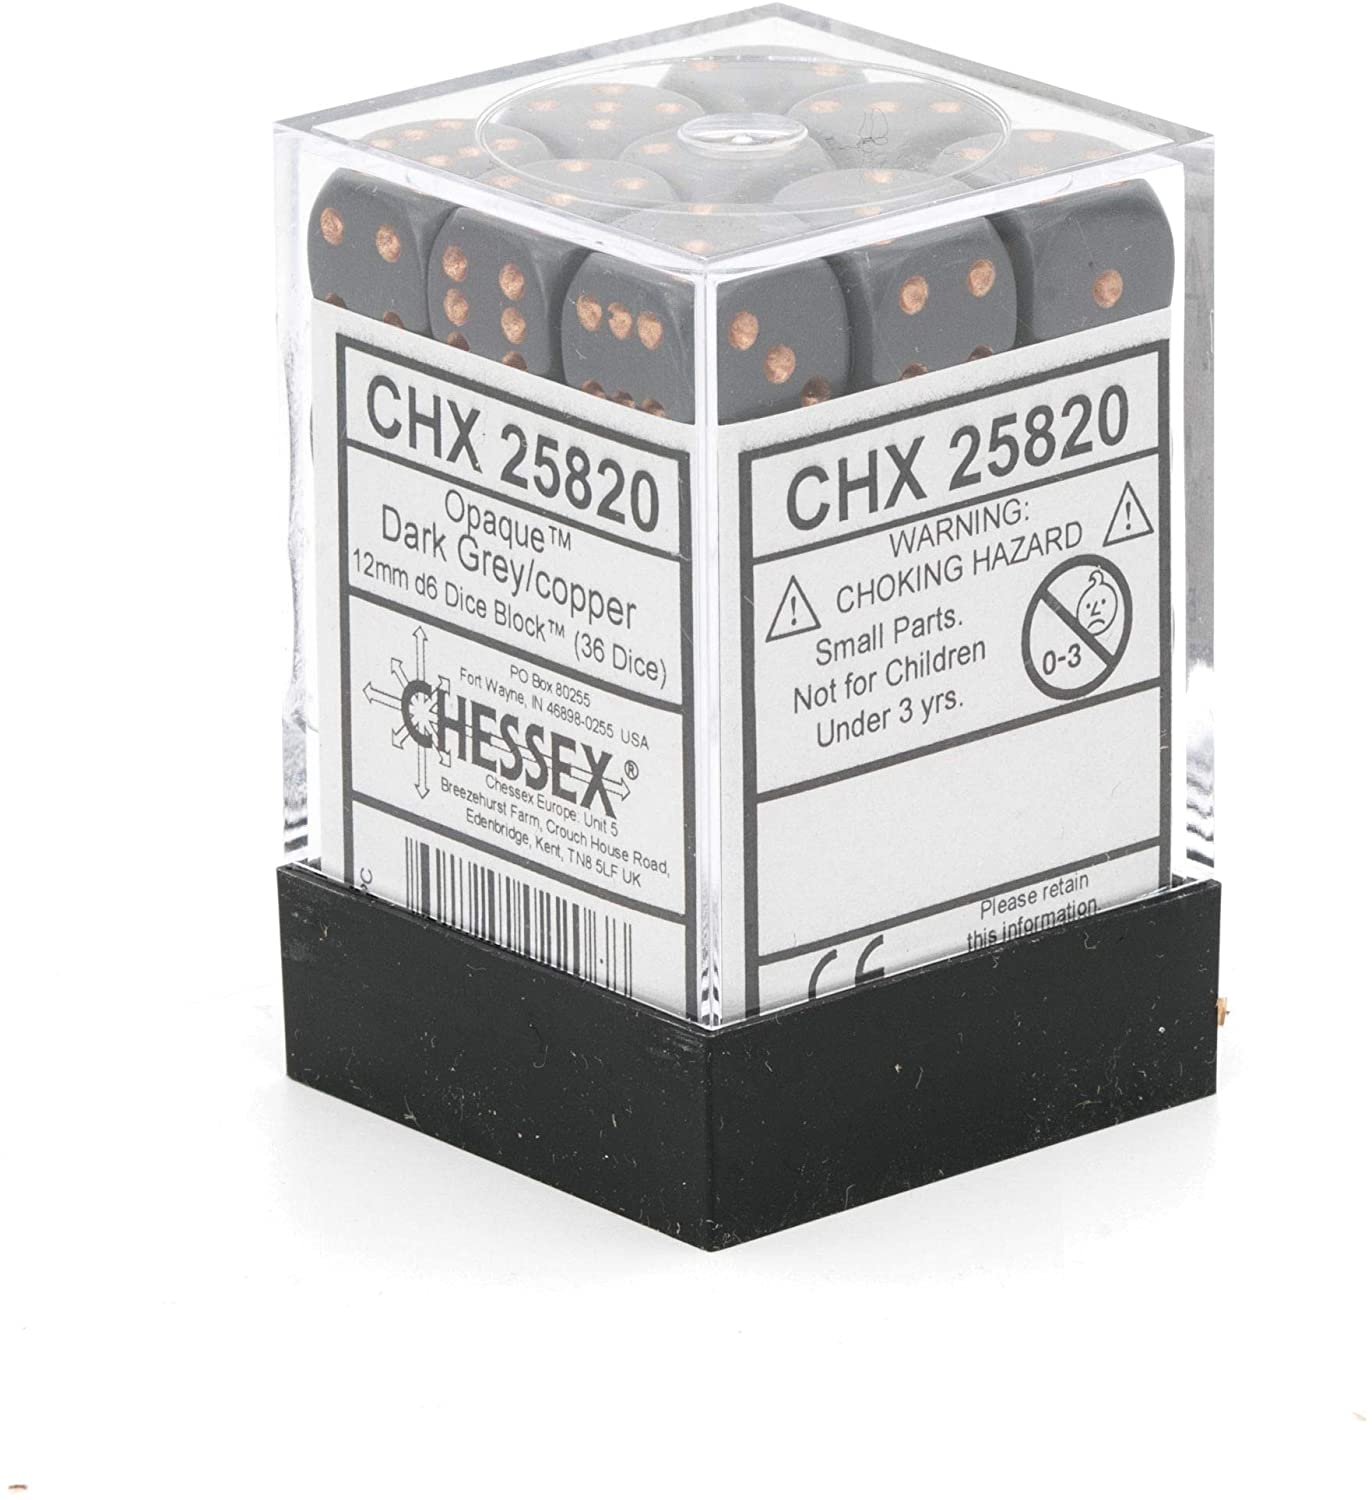 Chessex Dice: D6 Block 12mm - Opaque - Dark Grey with Copper (CHX 25820) - Gamescape